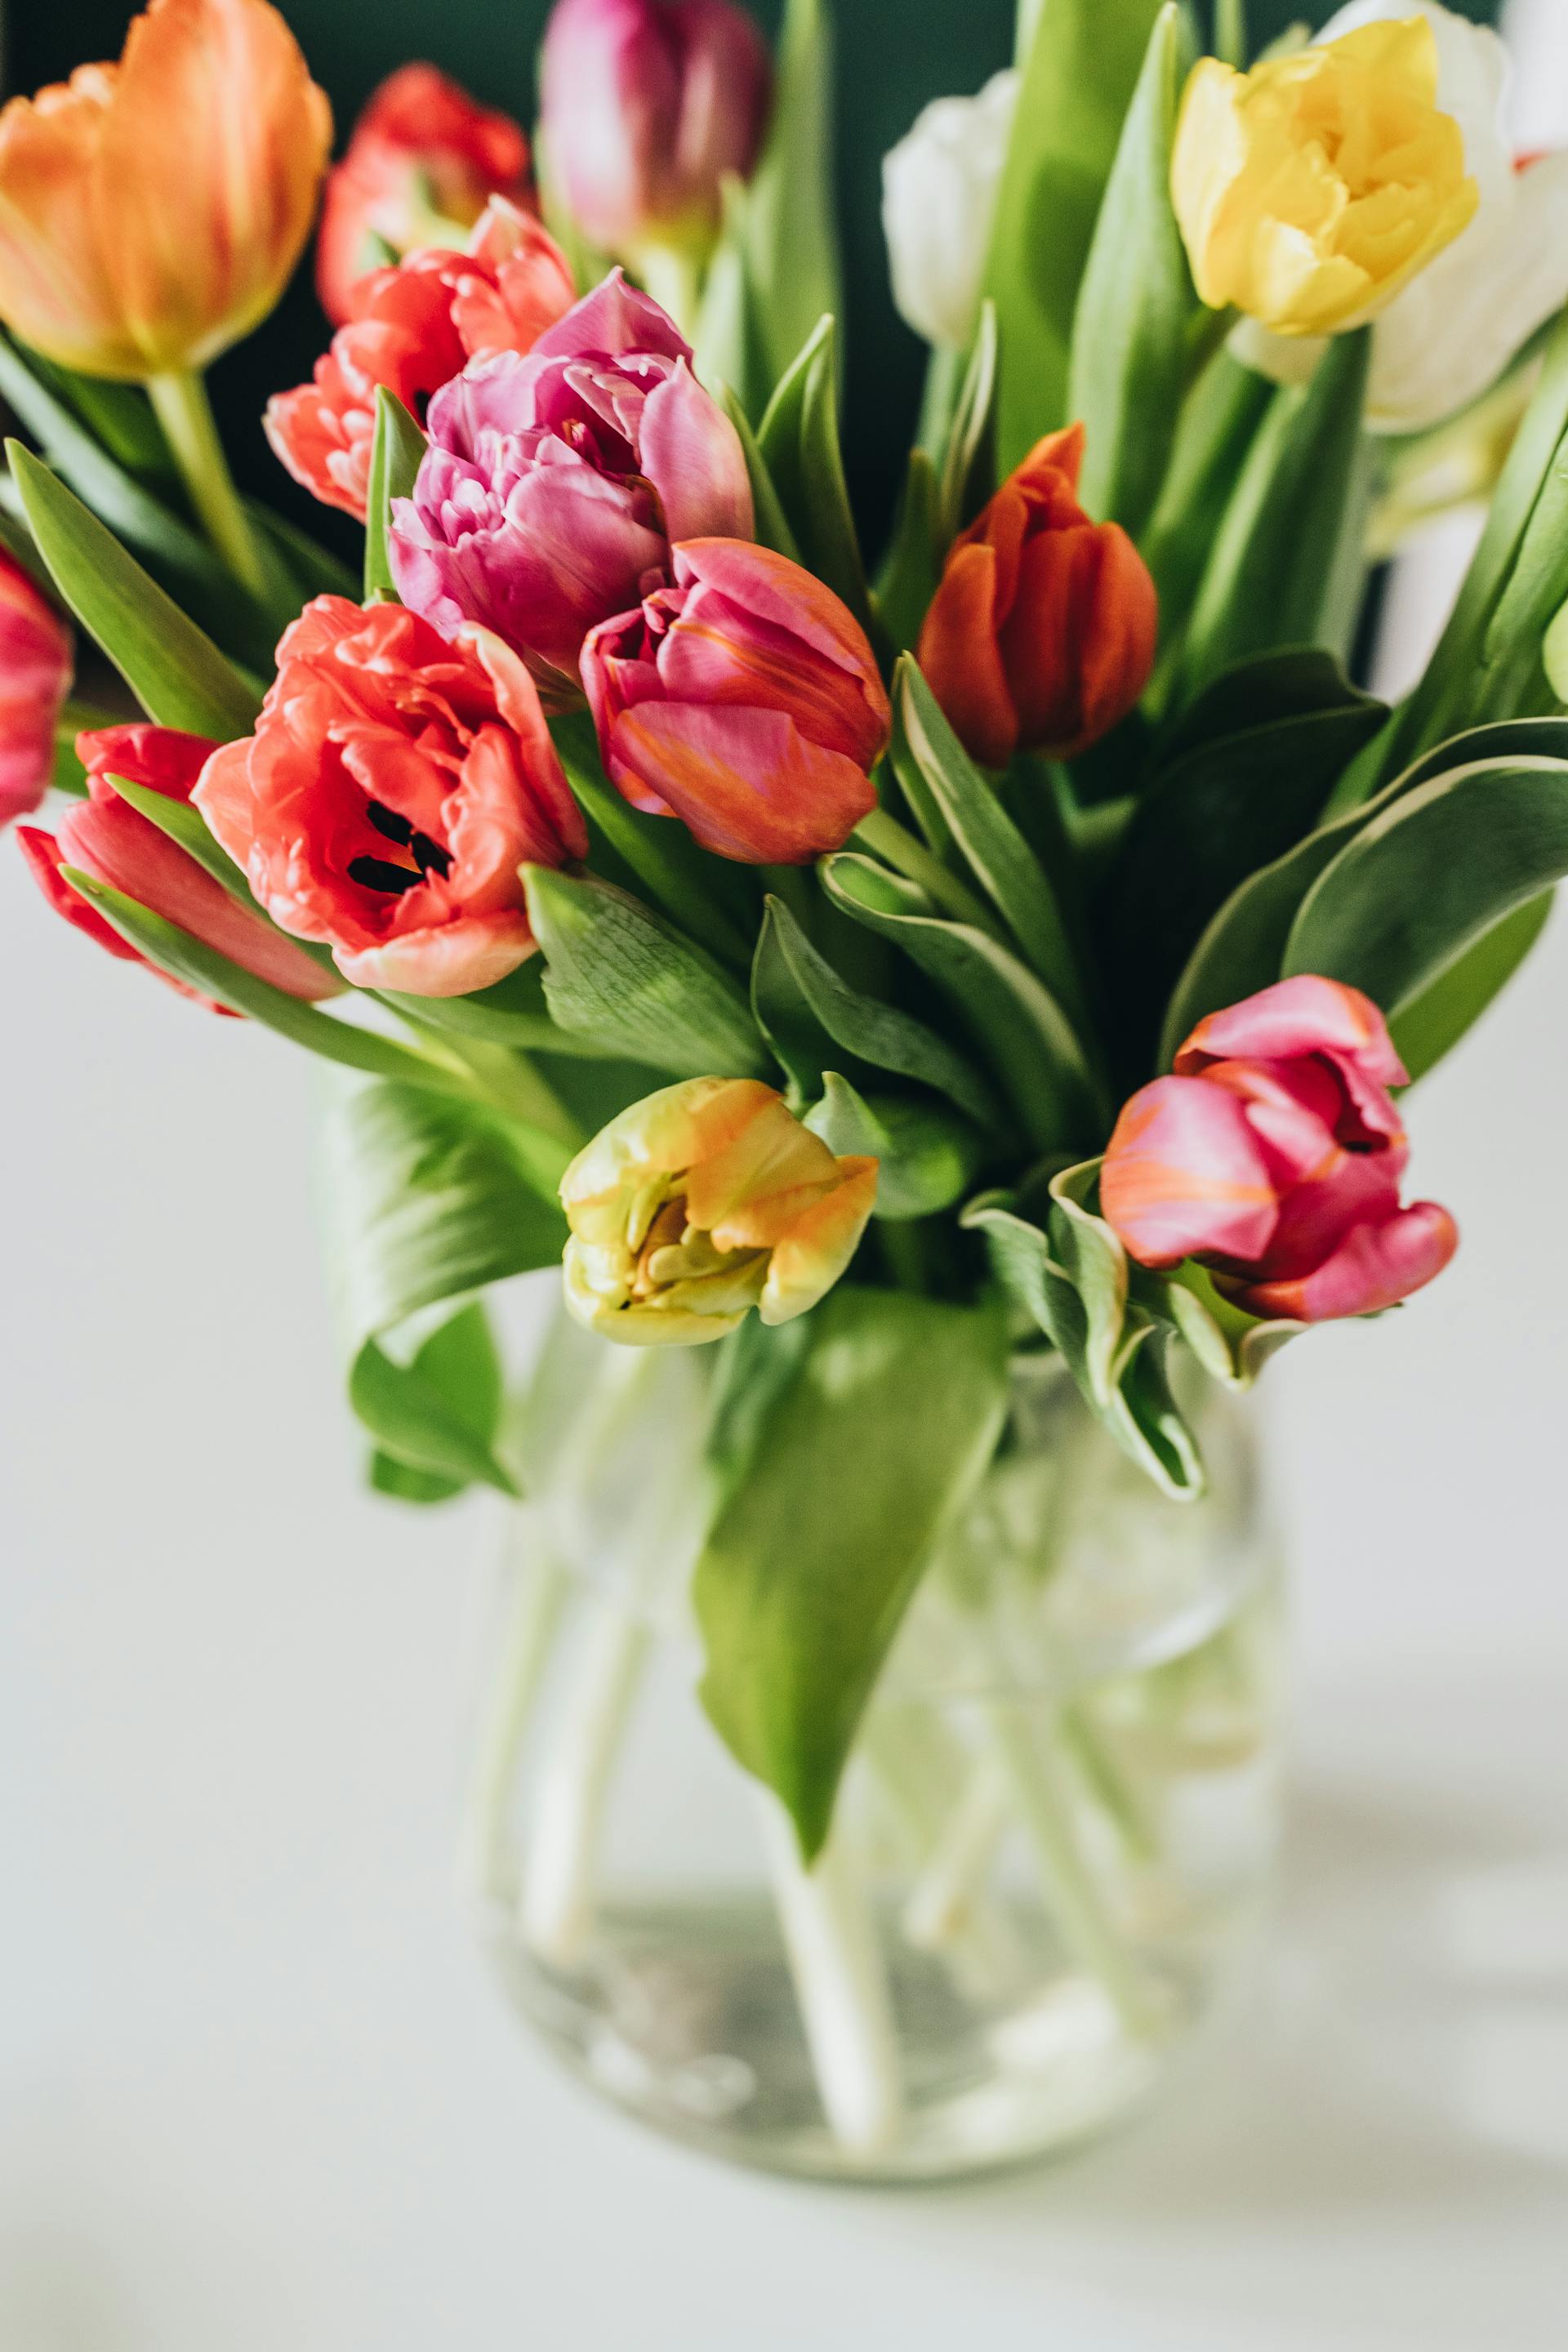 Tulips in a vase | Source: Pexels